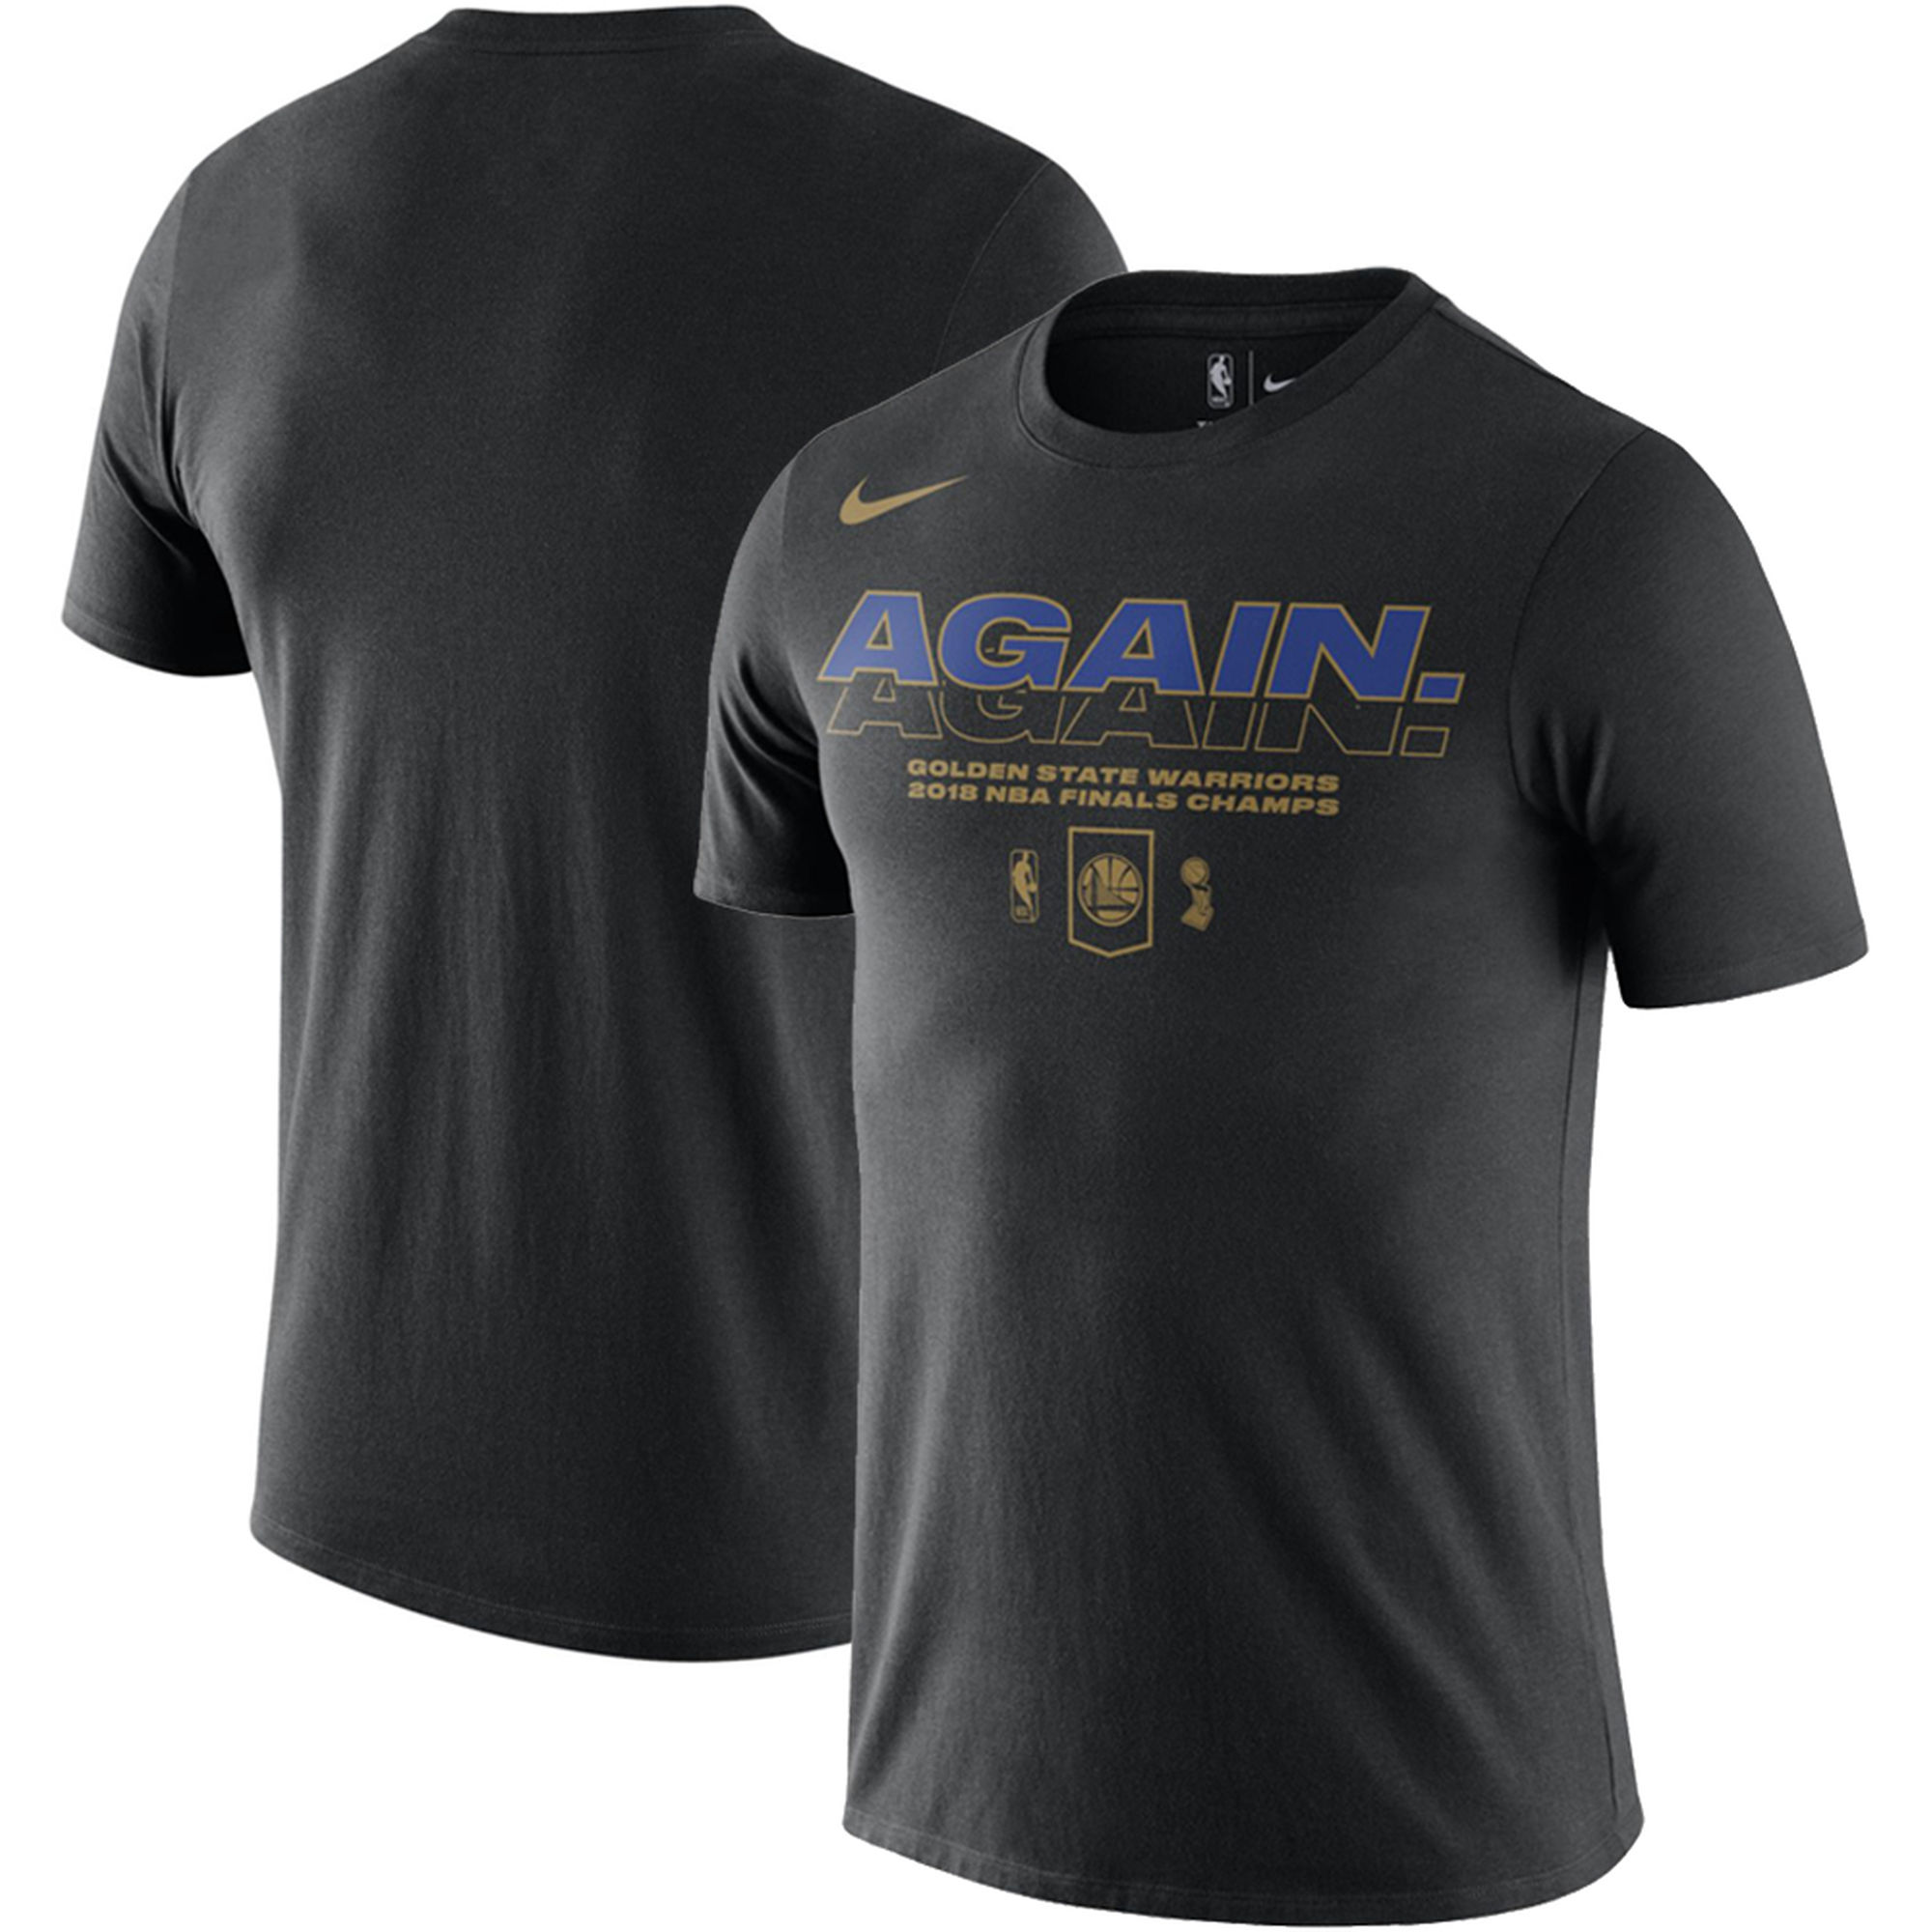 Golden State Warriors Nike 2018 NBA Finals Champions Celebration Mantra DFCT T-Shirt Black